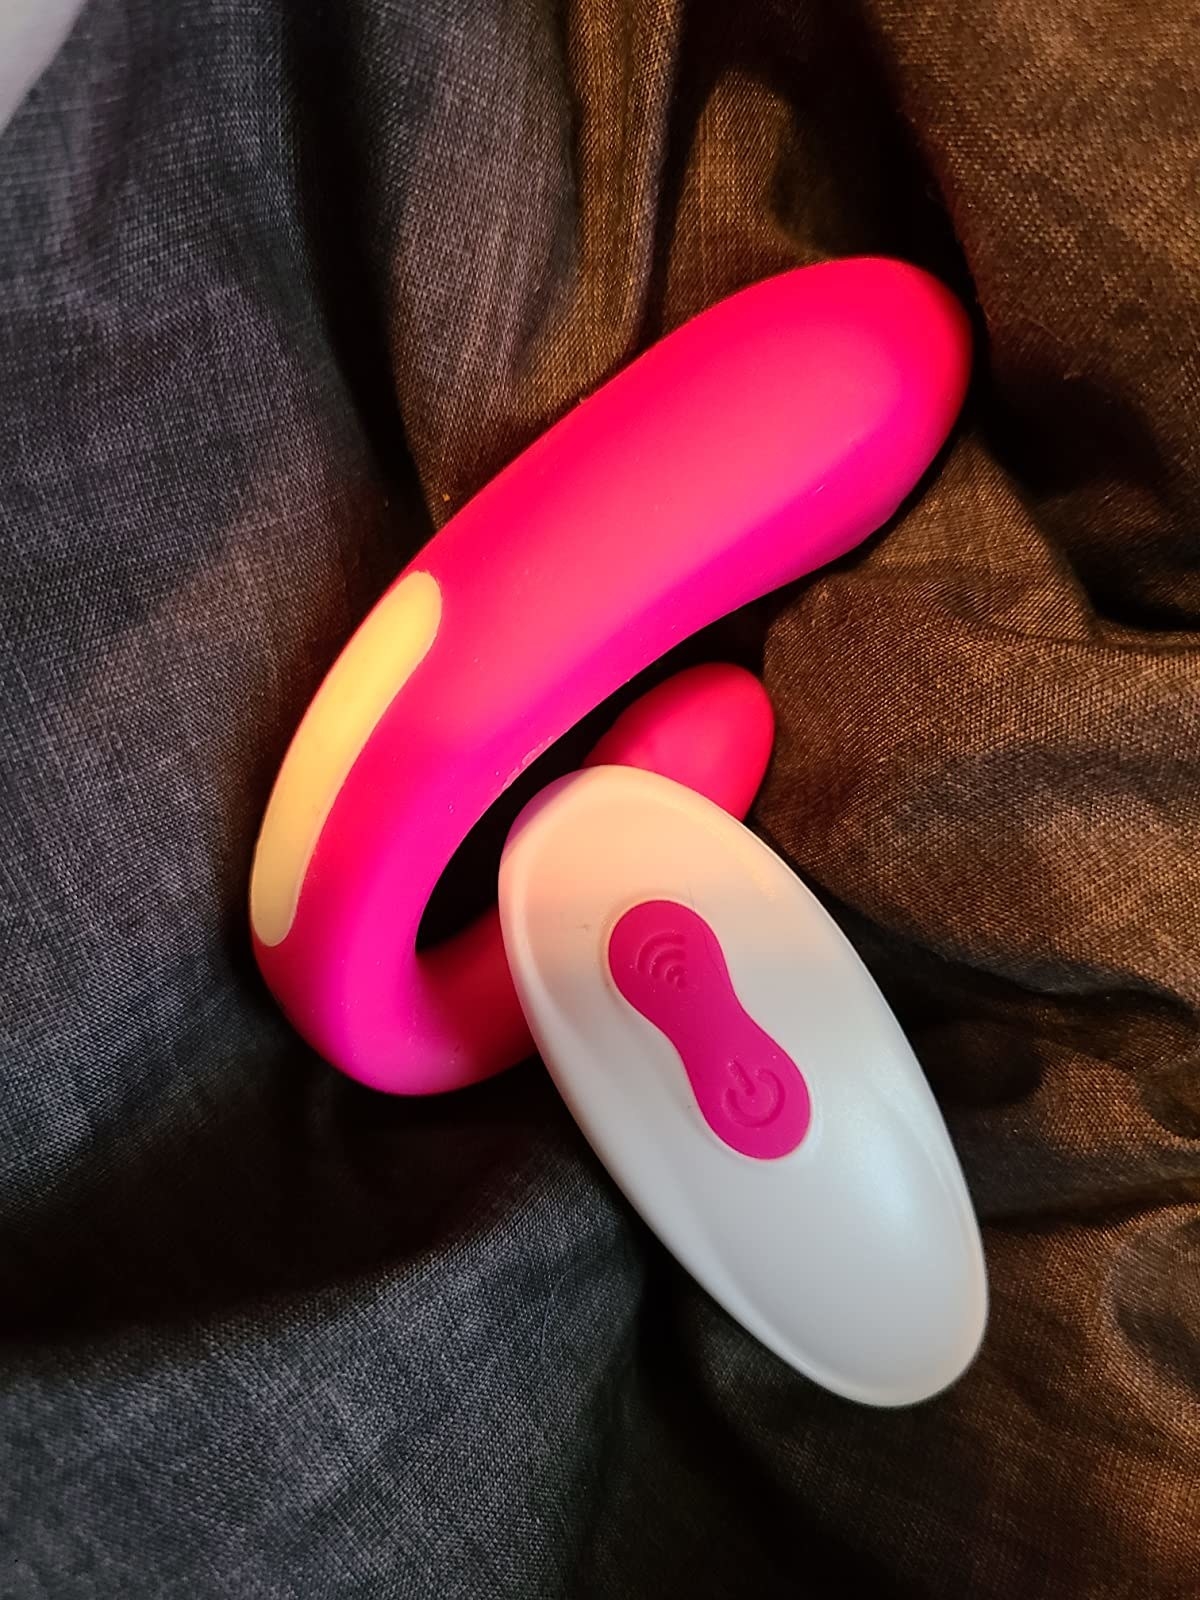 Pink vibrator and white remote control